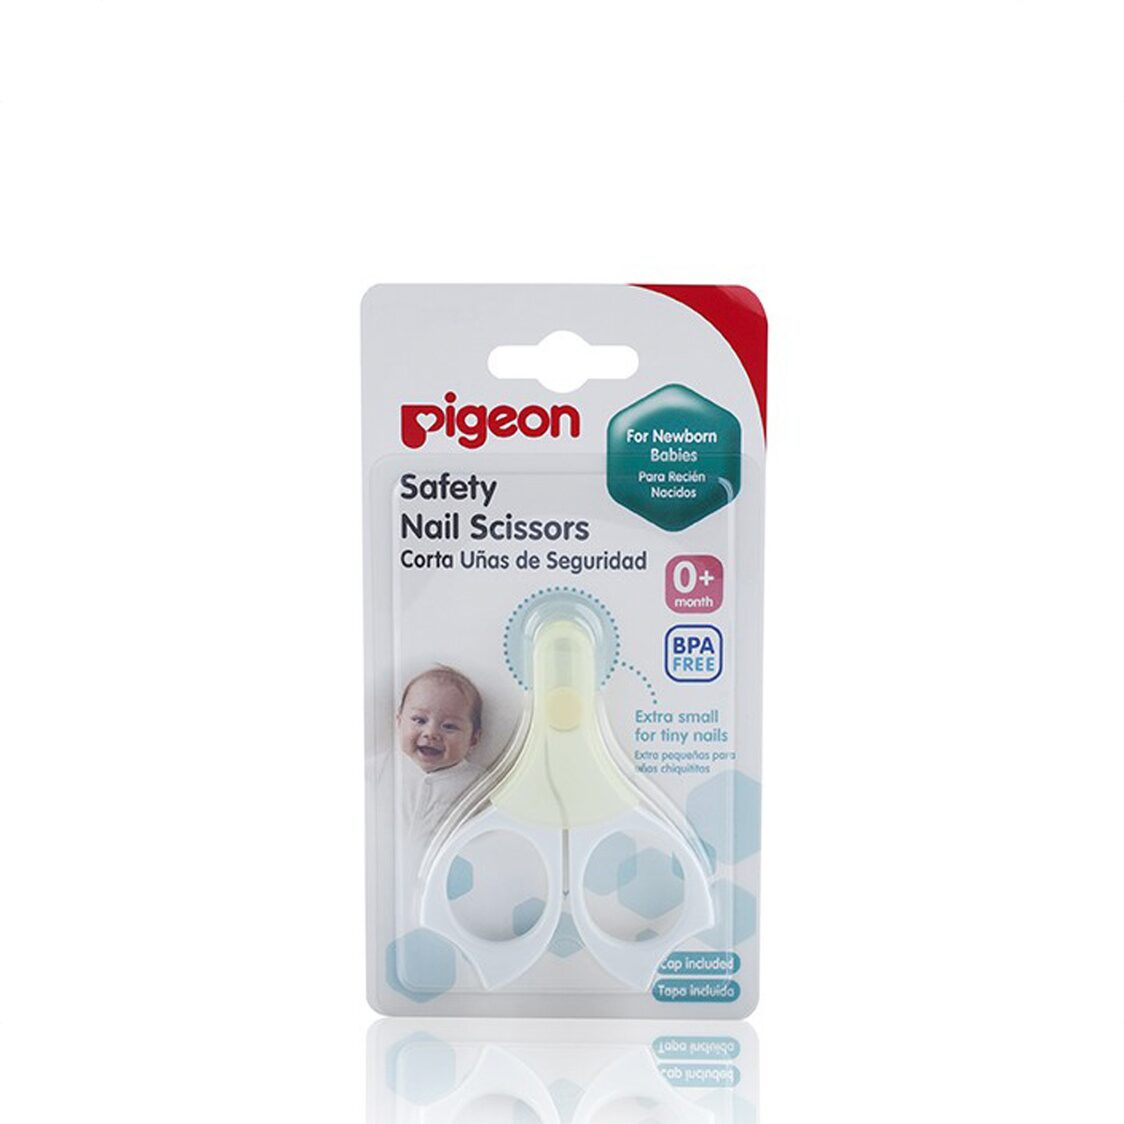 Pigeon Safety Nail Scissors for Newborn